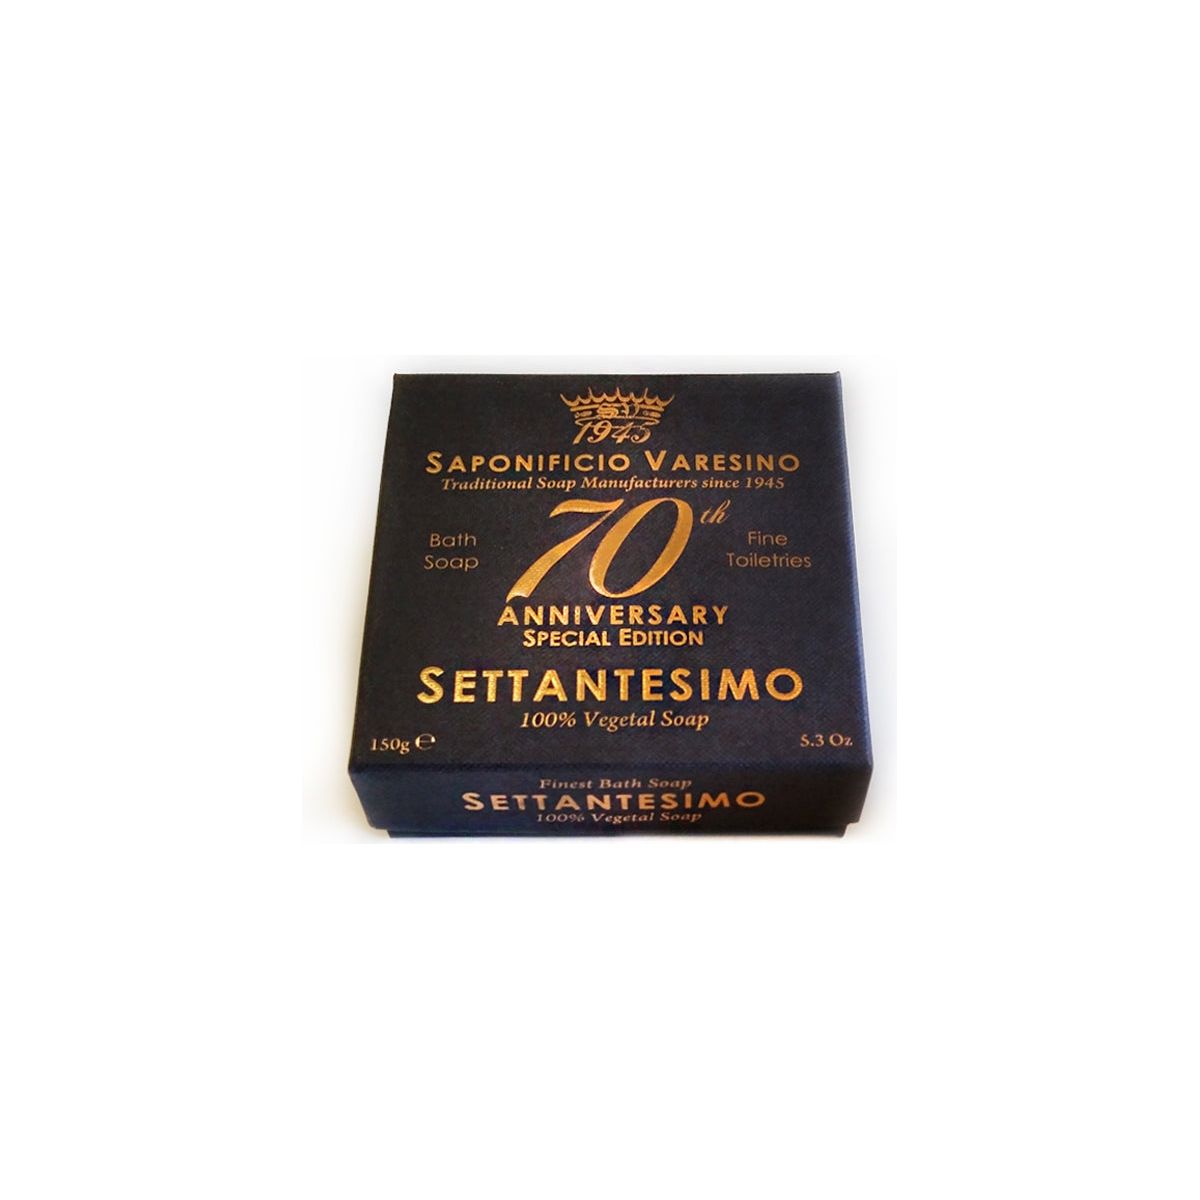 Saponificio Varesino - 70th Anniversary Special Edition Settantesimo - Badeseife im Geschenkkarton